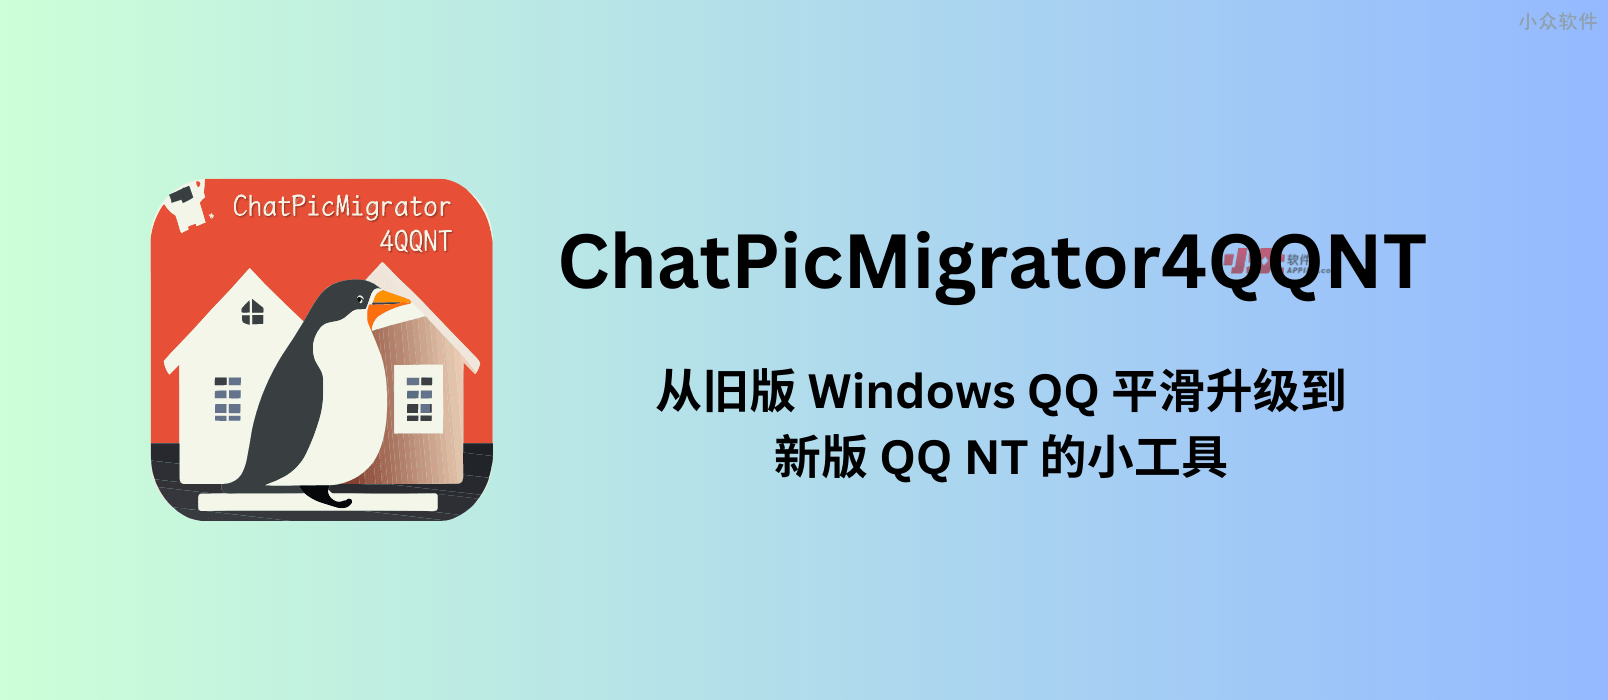 ChatPicMigrator4QQNT – 从旧版 Windows QQ 平滑升级到新版 QQ NT 的小工具